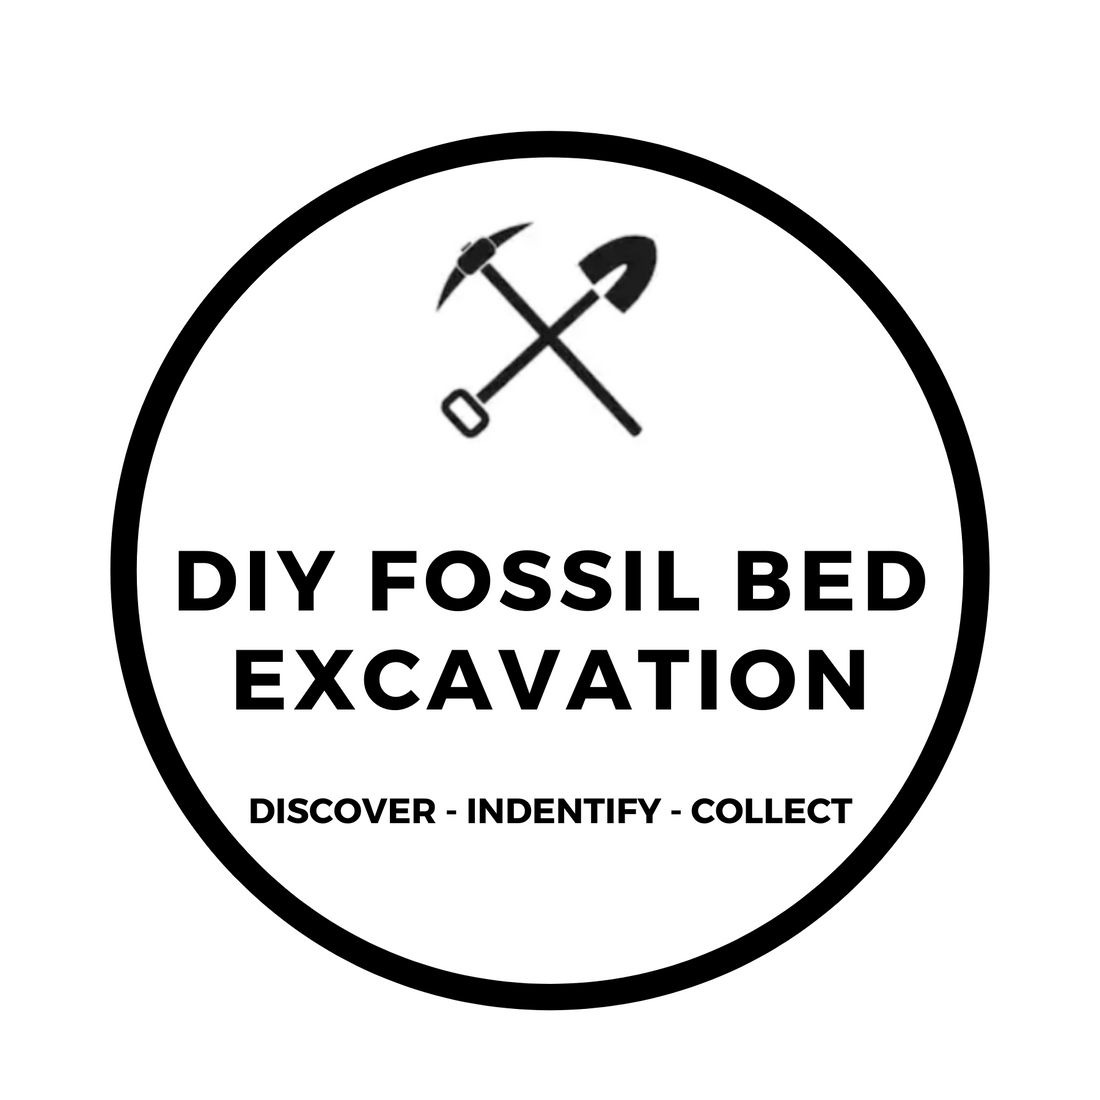 DIY FOSSIL BED EXCAVATION